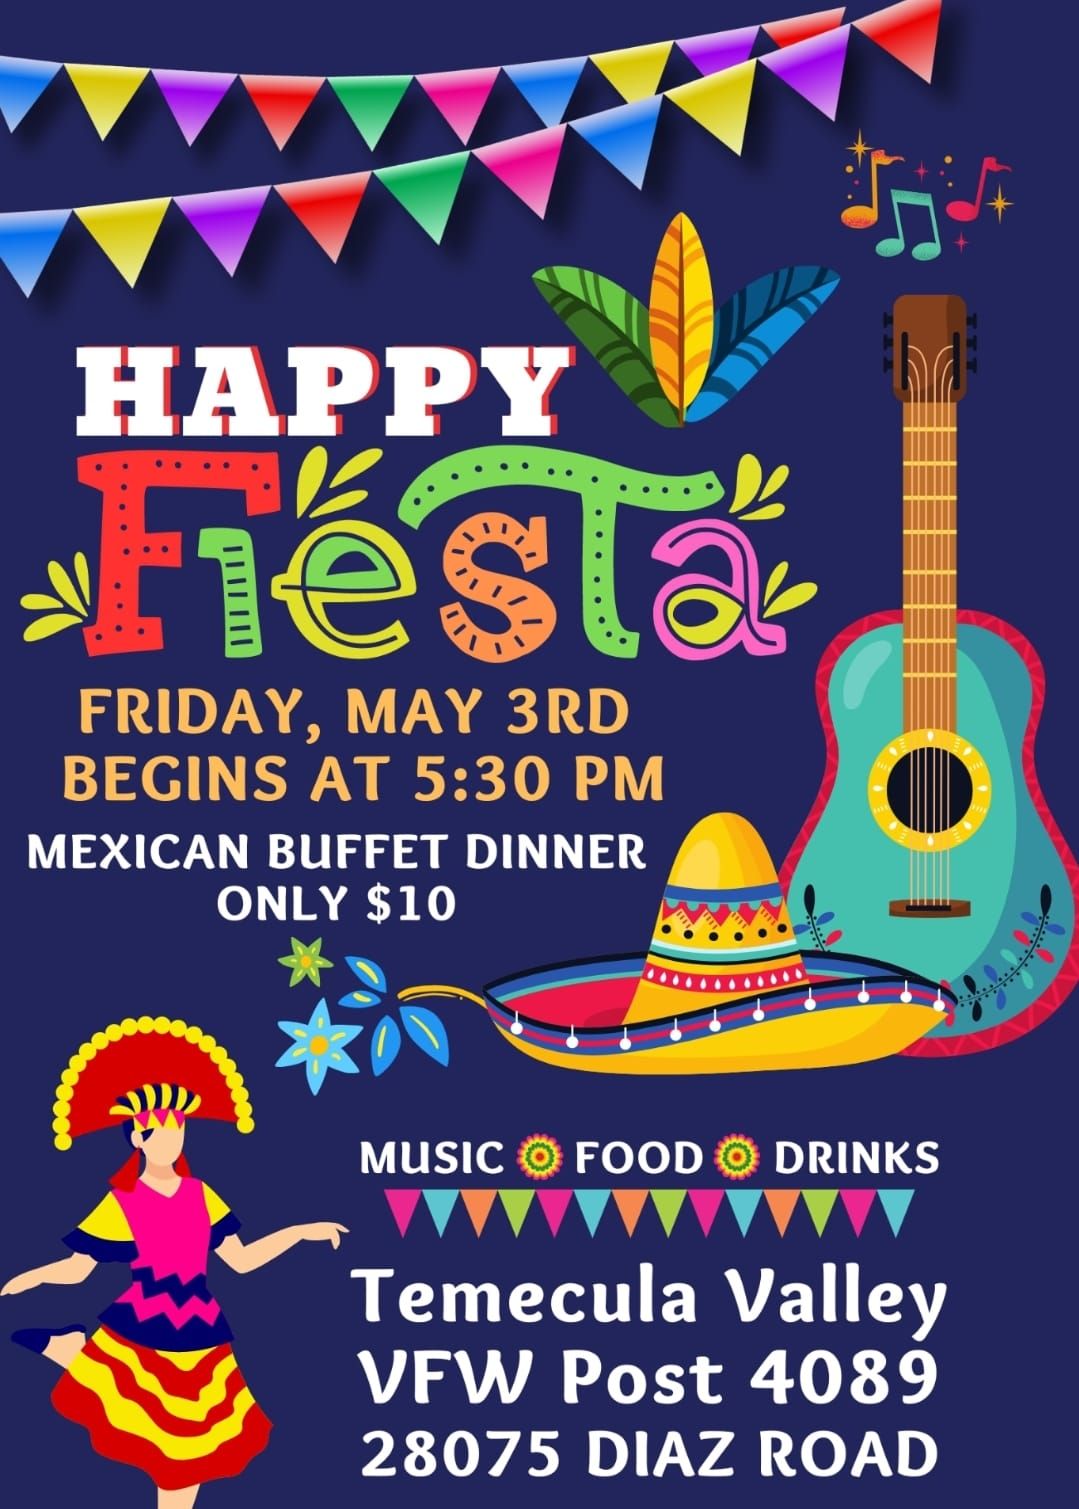 Fiesta Celebration - LIVE Music & Great Food